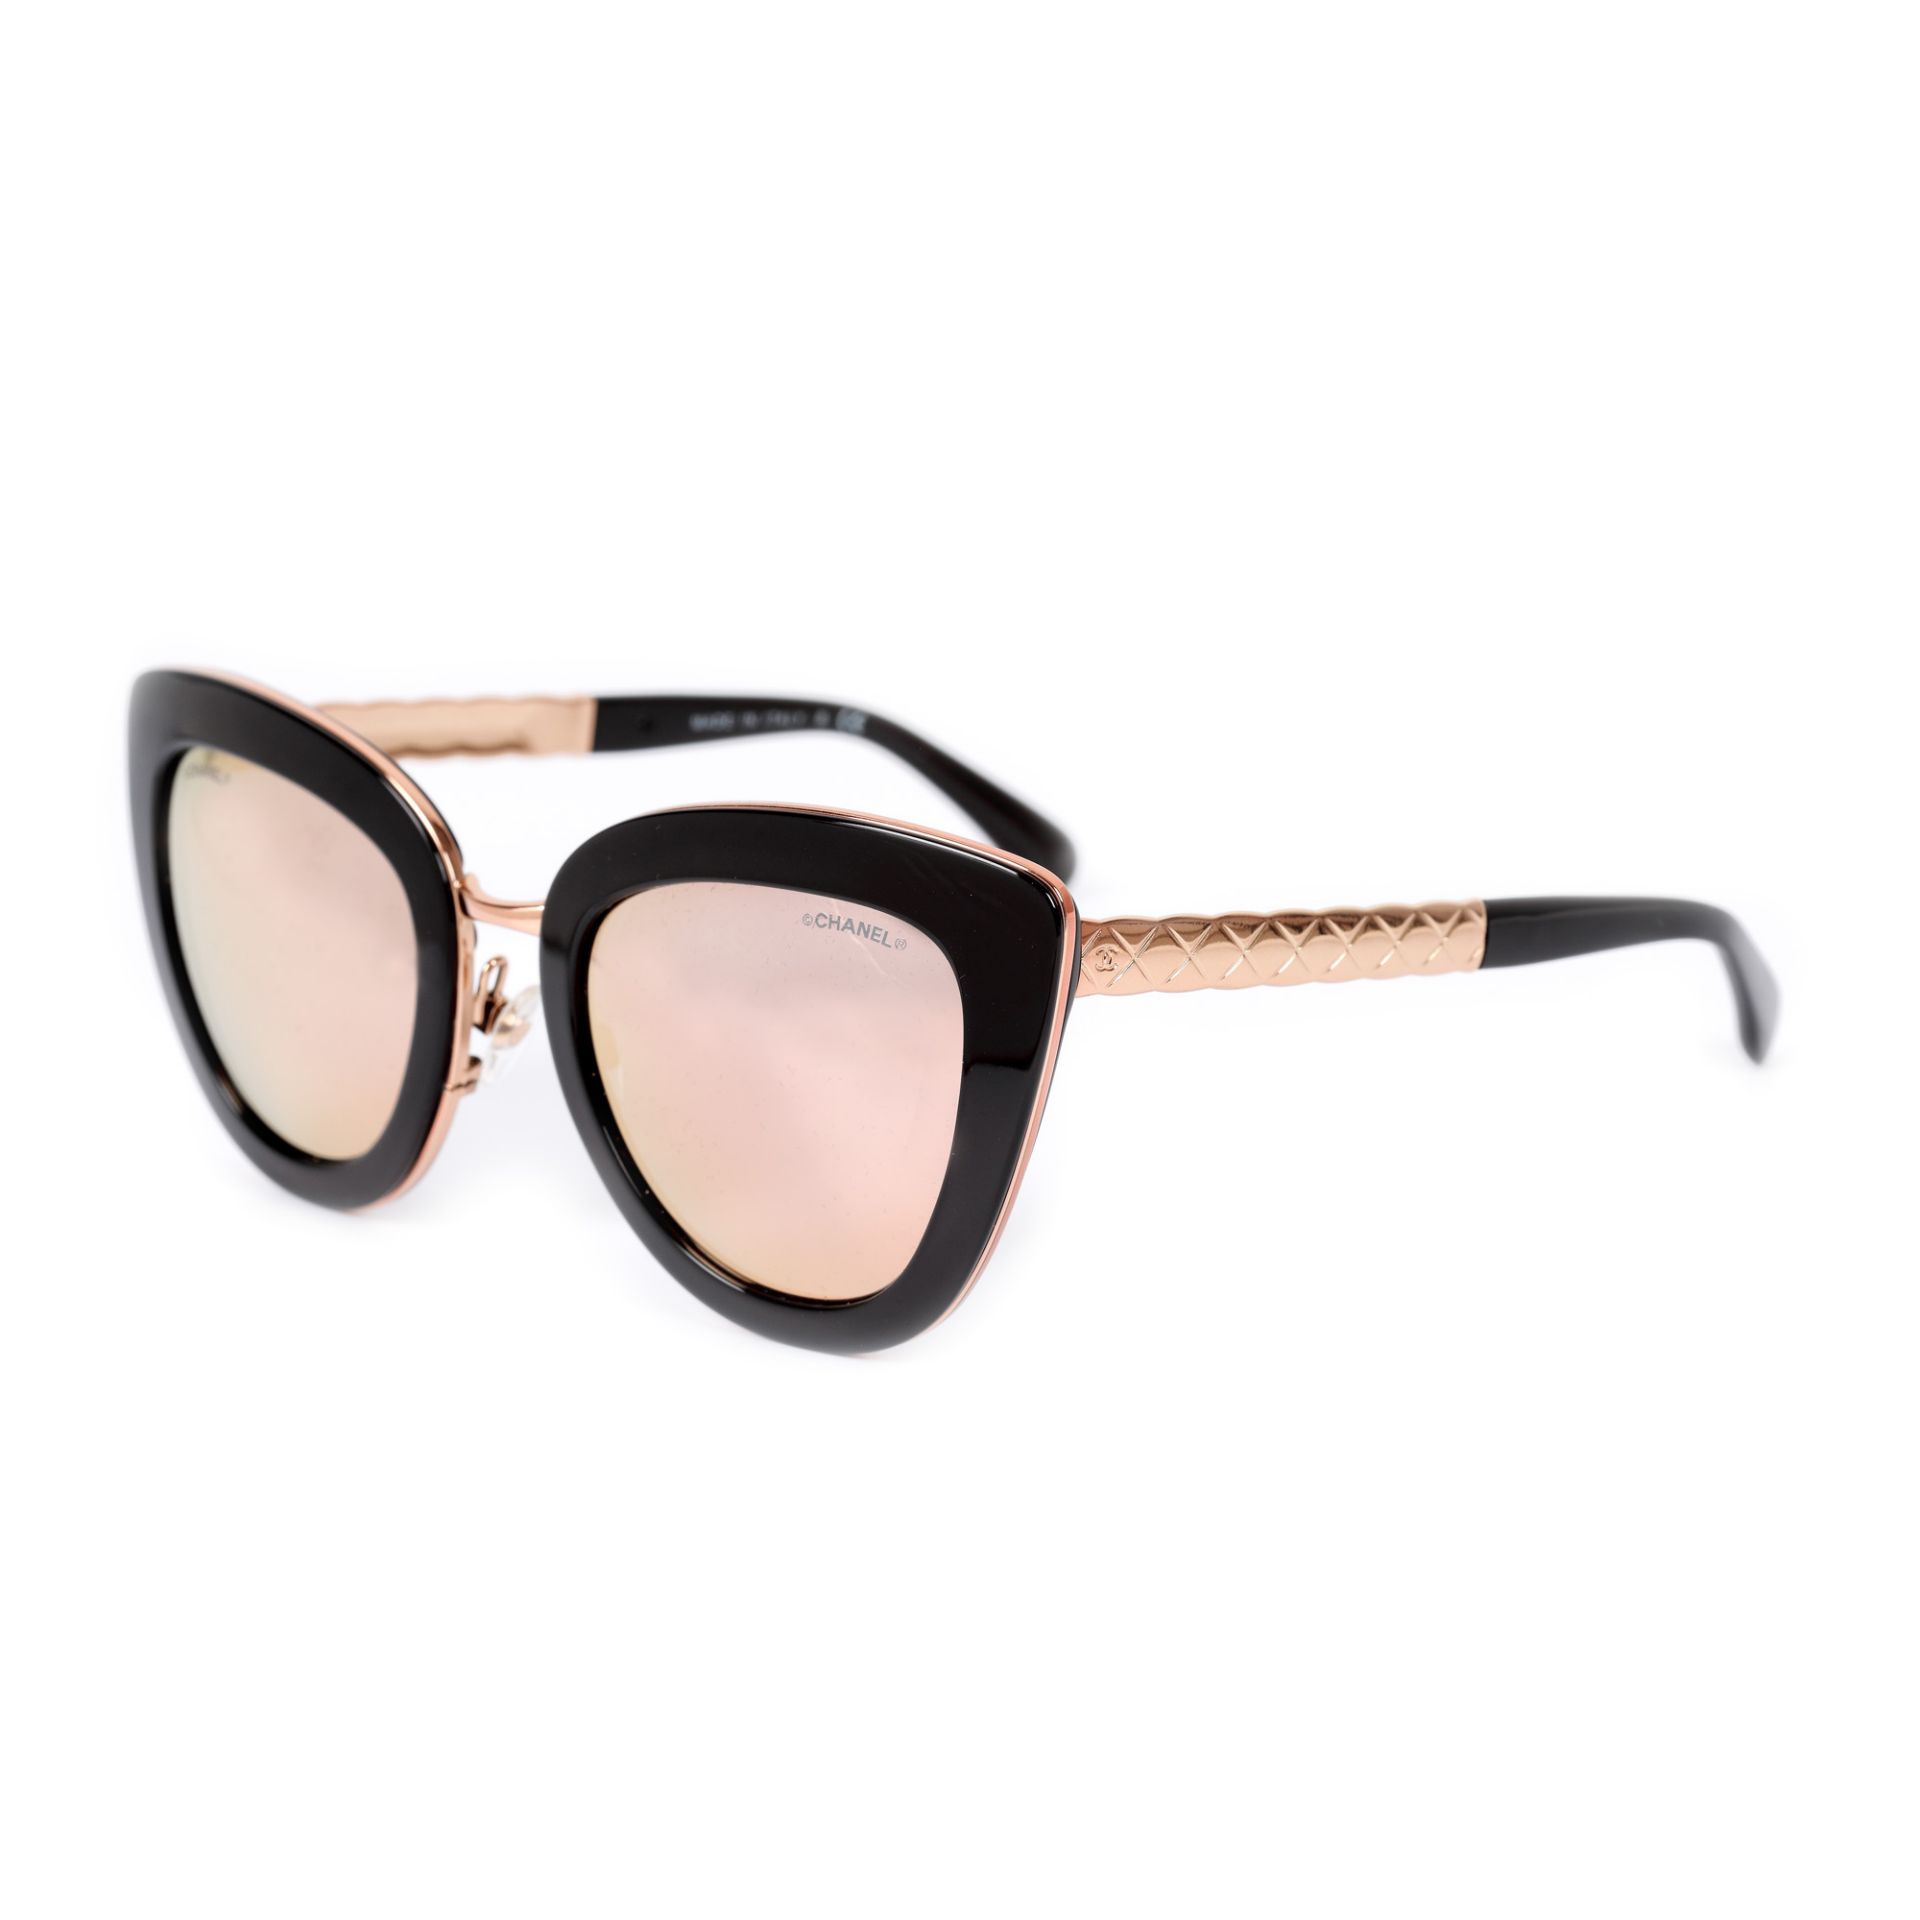 Chanel Cat Eye glasses, women, case - Image 3 of 7